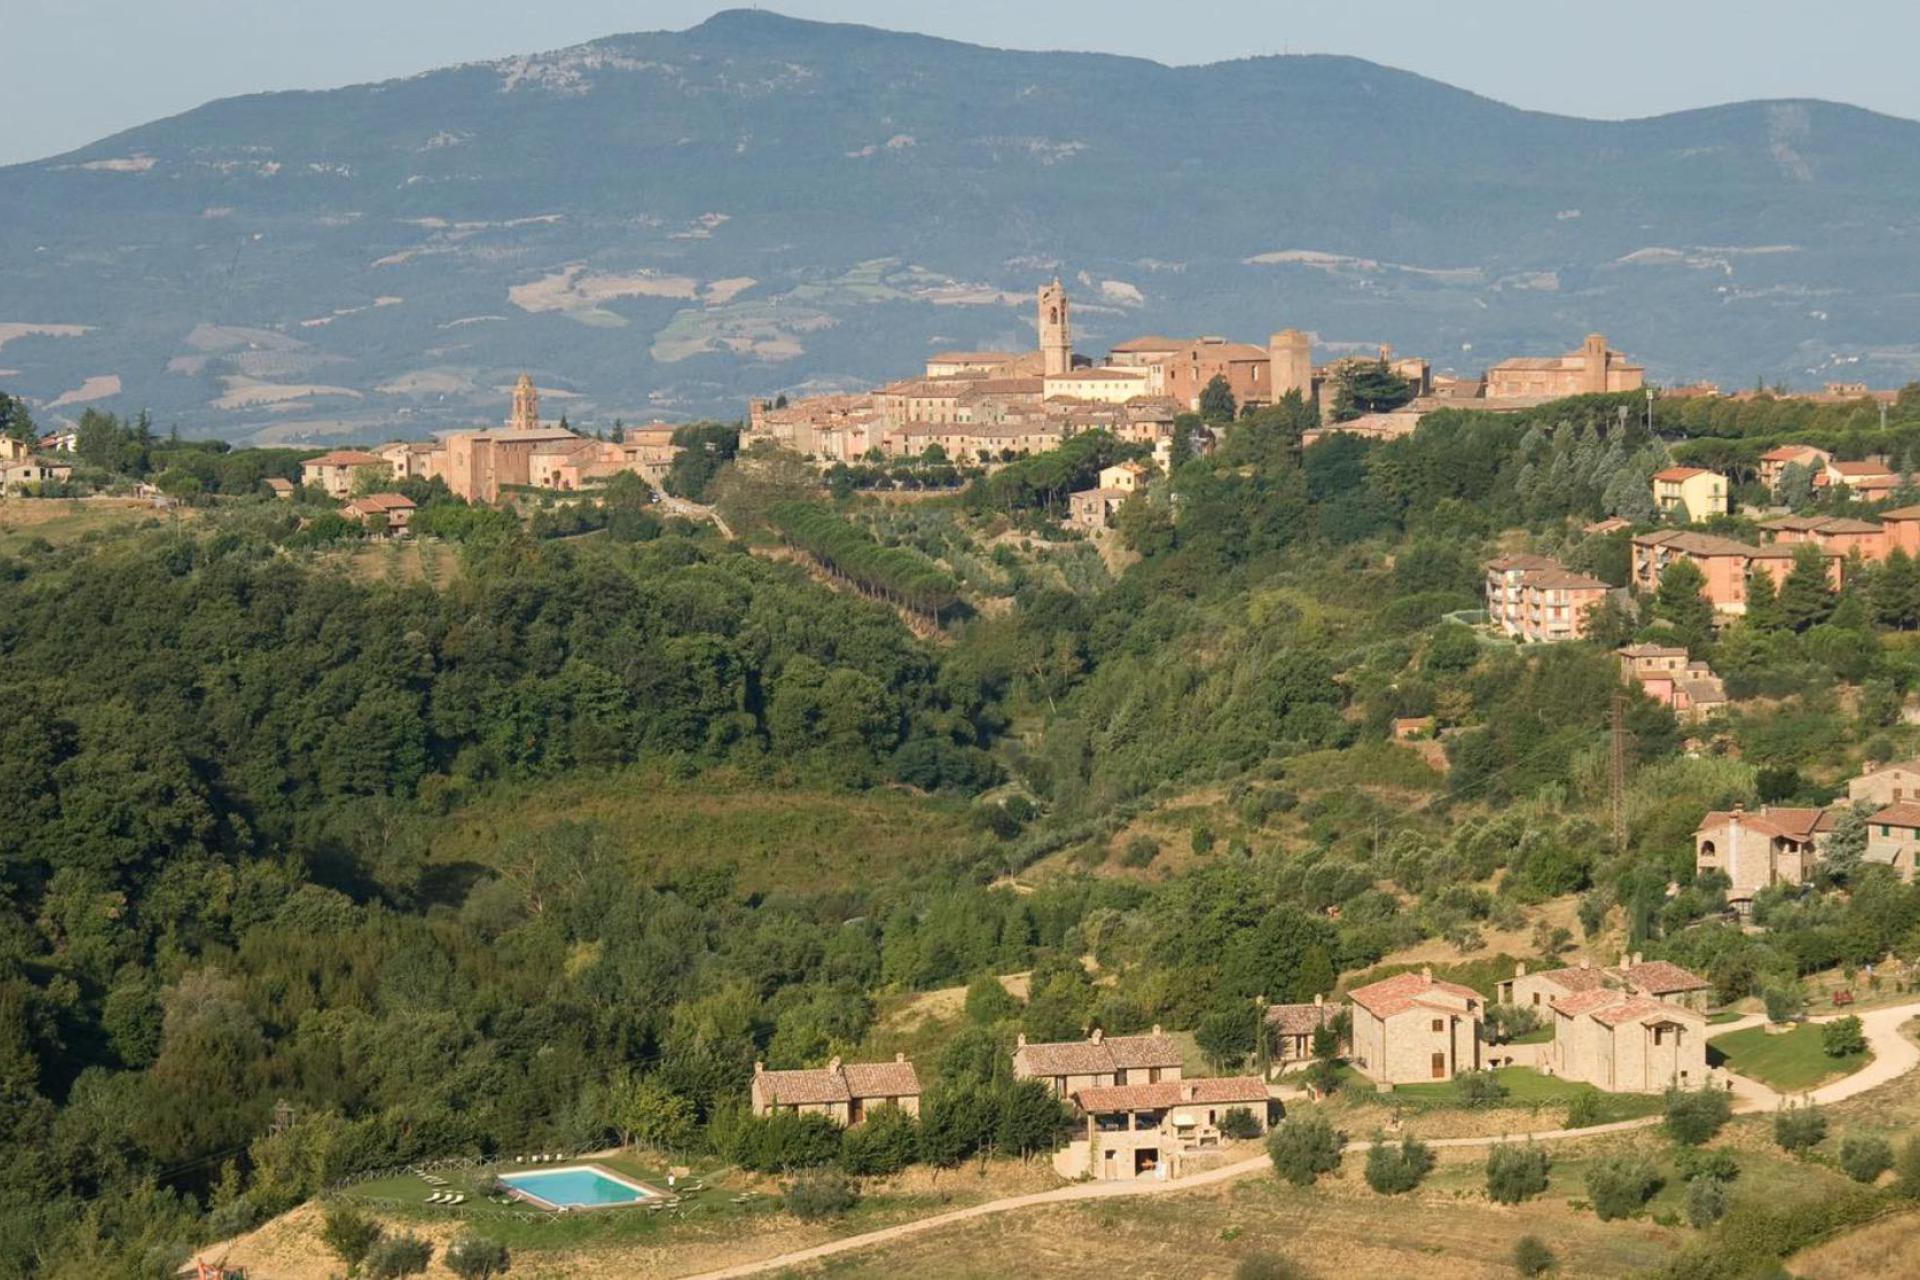 Agriturismo Umbria Agriturismo a pochi passi da un paesino tra l’Umbria e la Toscana